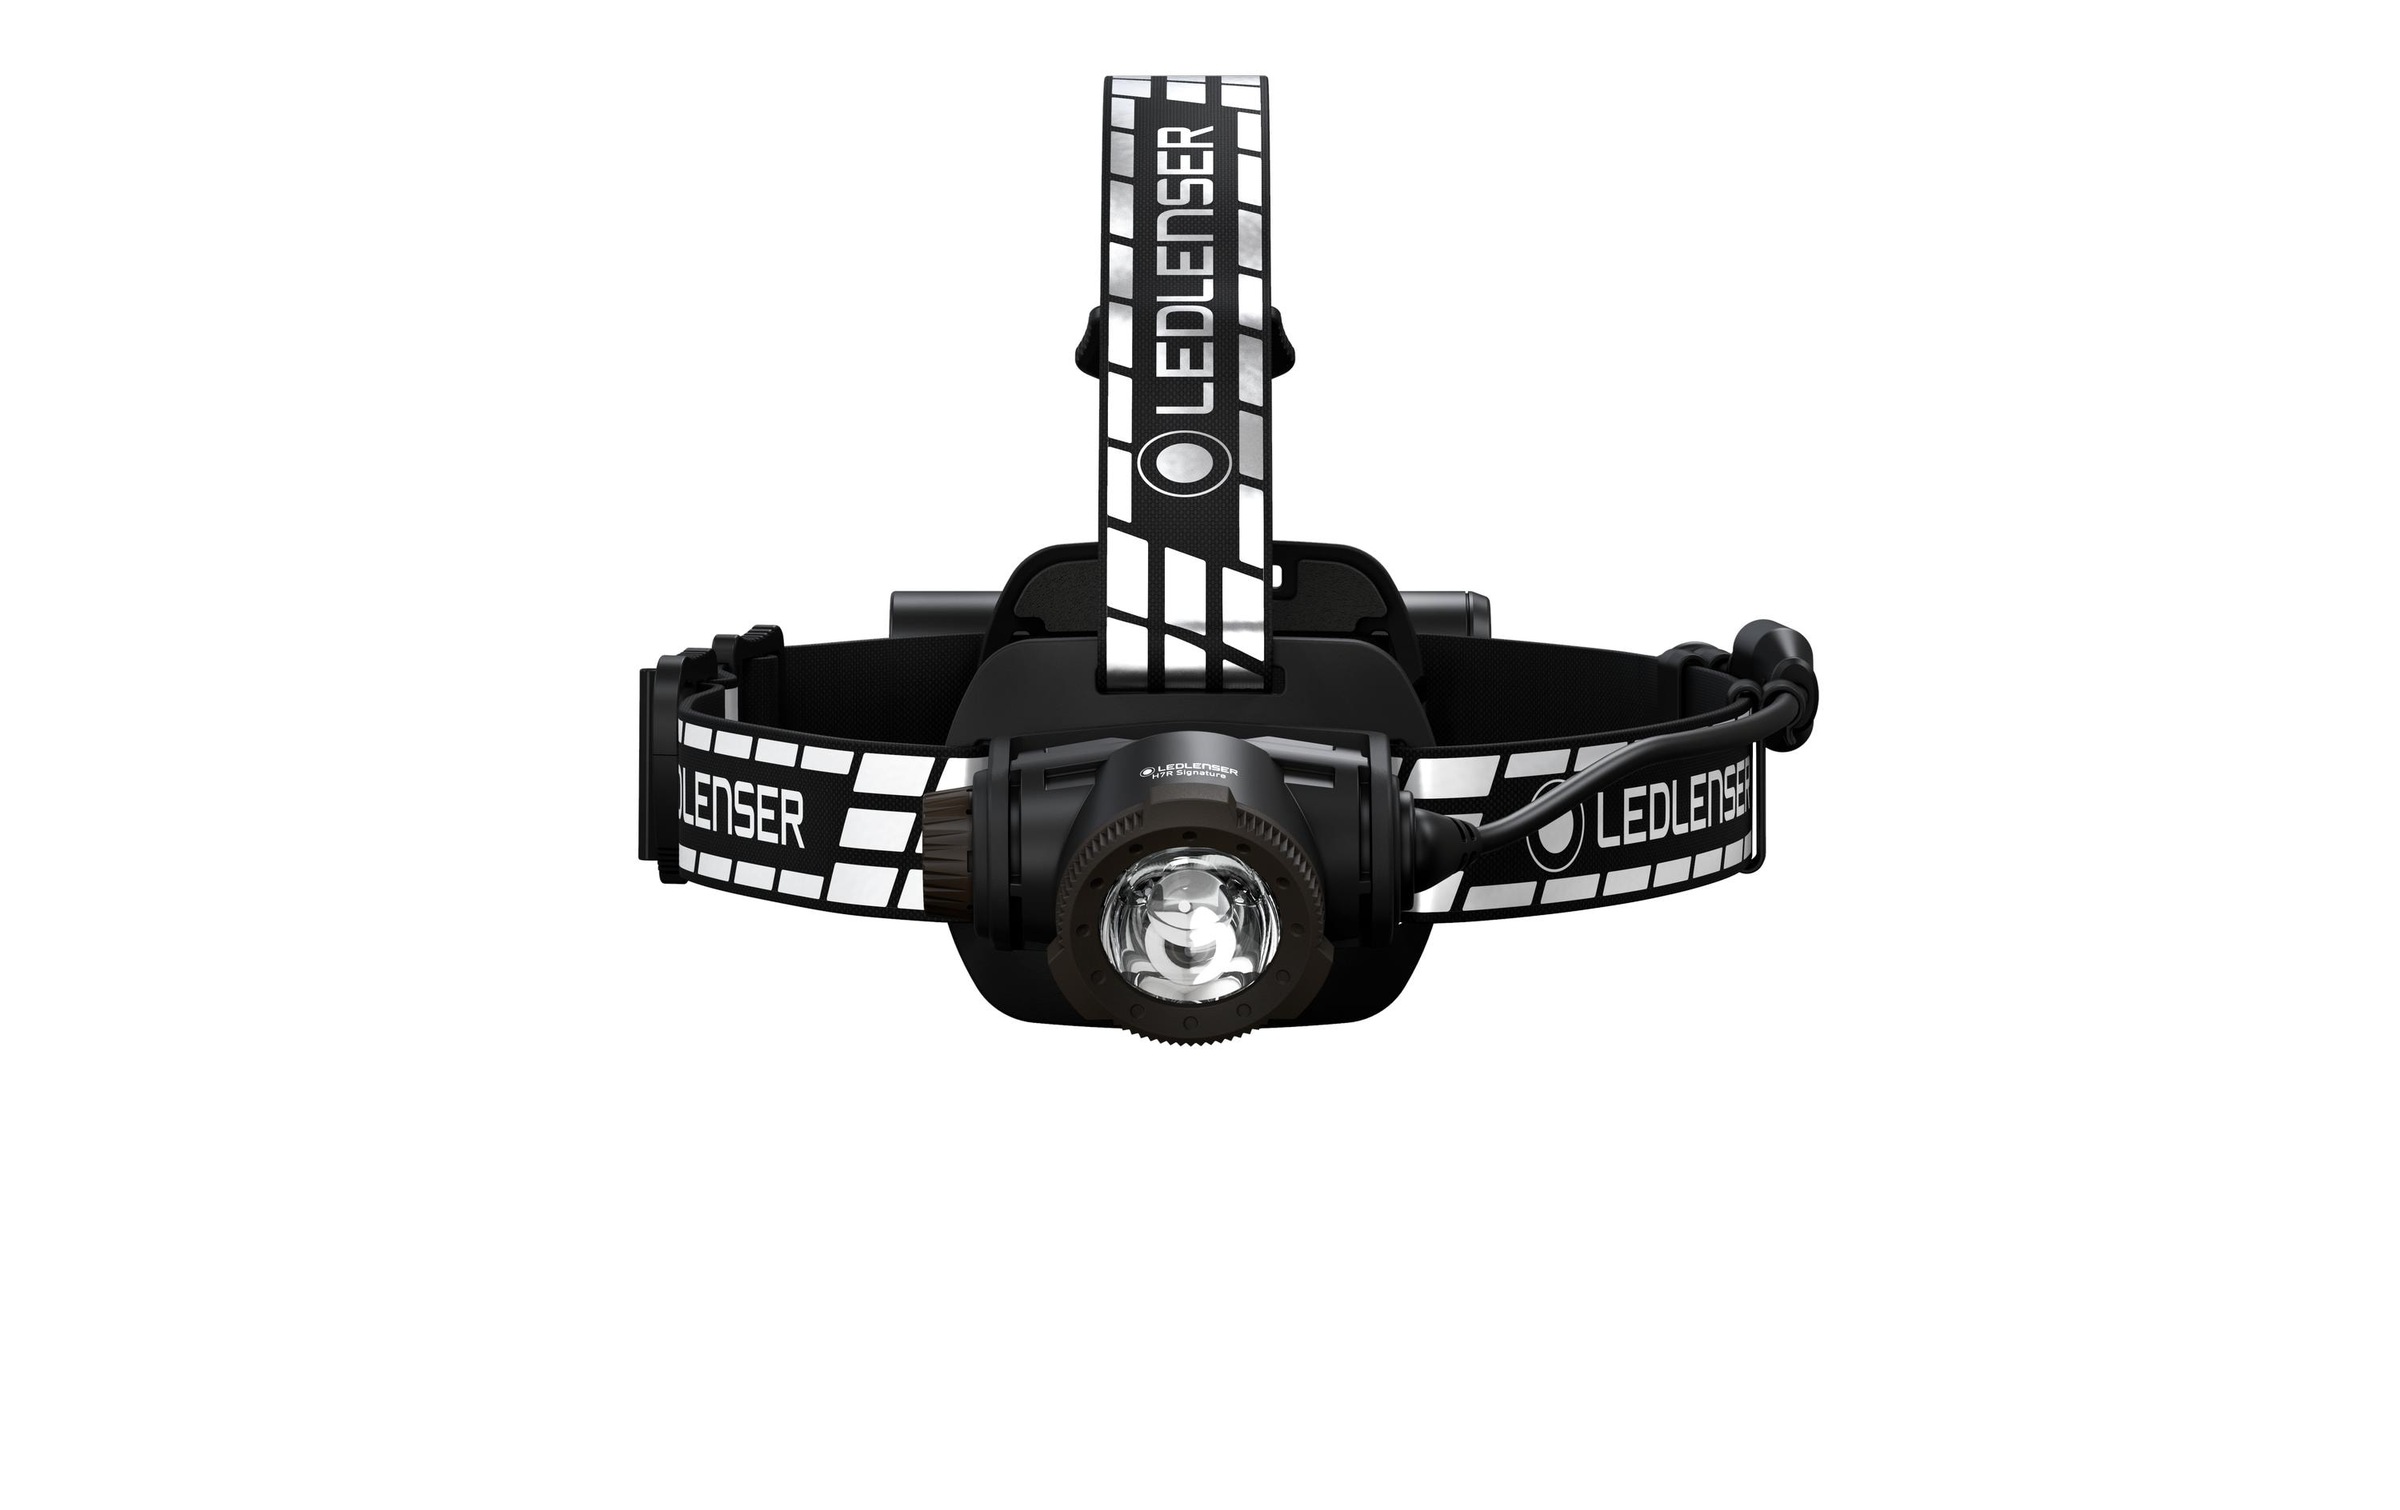 Led Lenser Stirnlampe »H7R Signature«